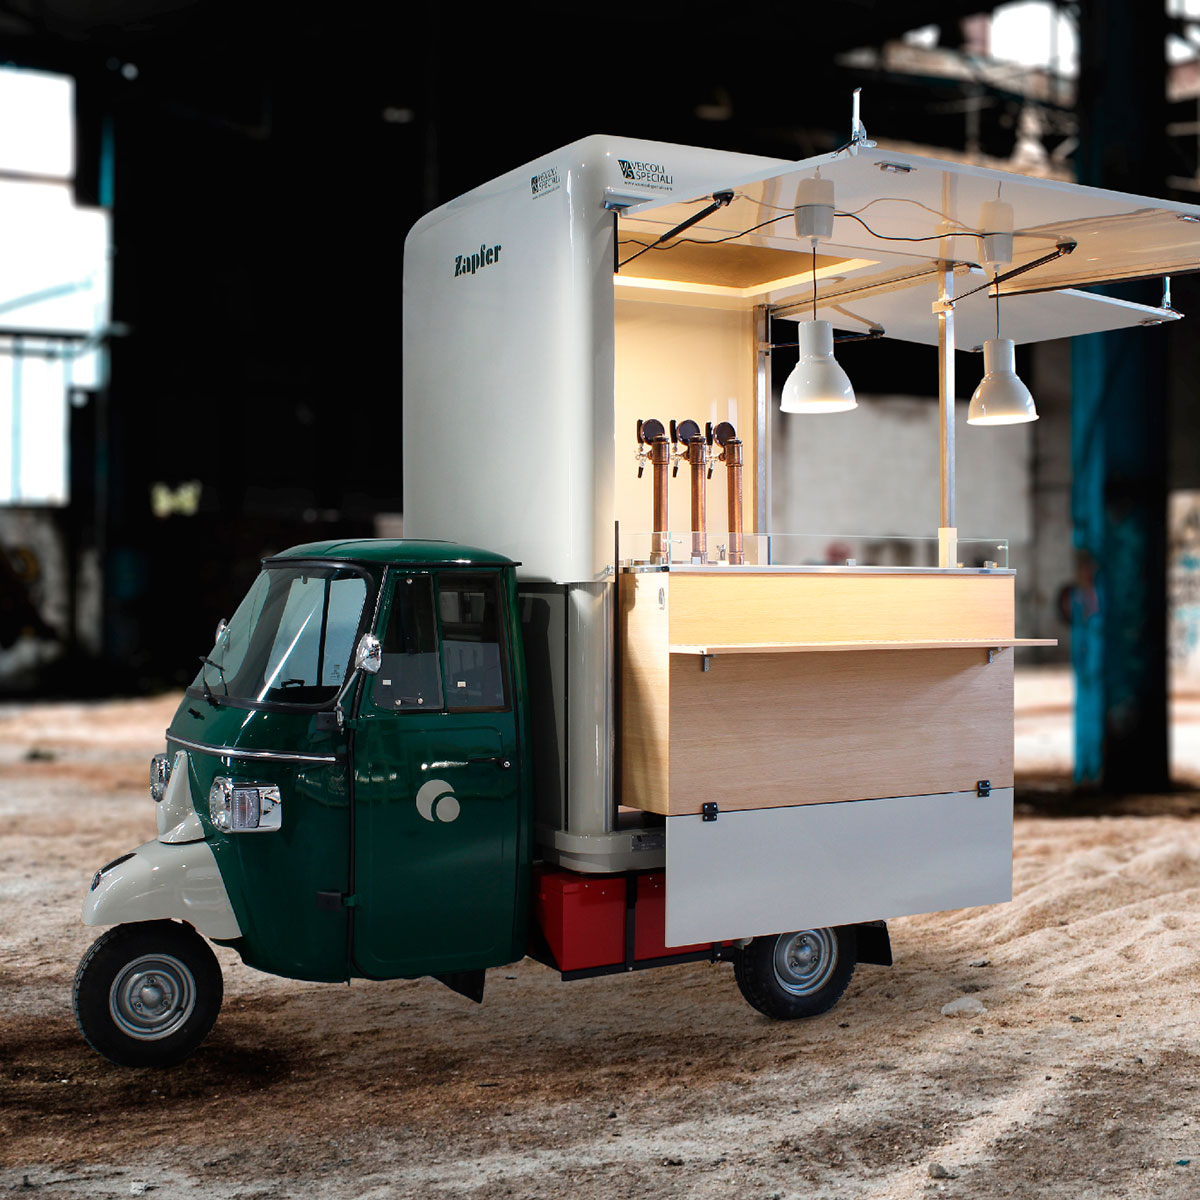 food truck cost of bierwagen brauerei zapfer elektro reflects the quality of the VS set-up